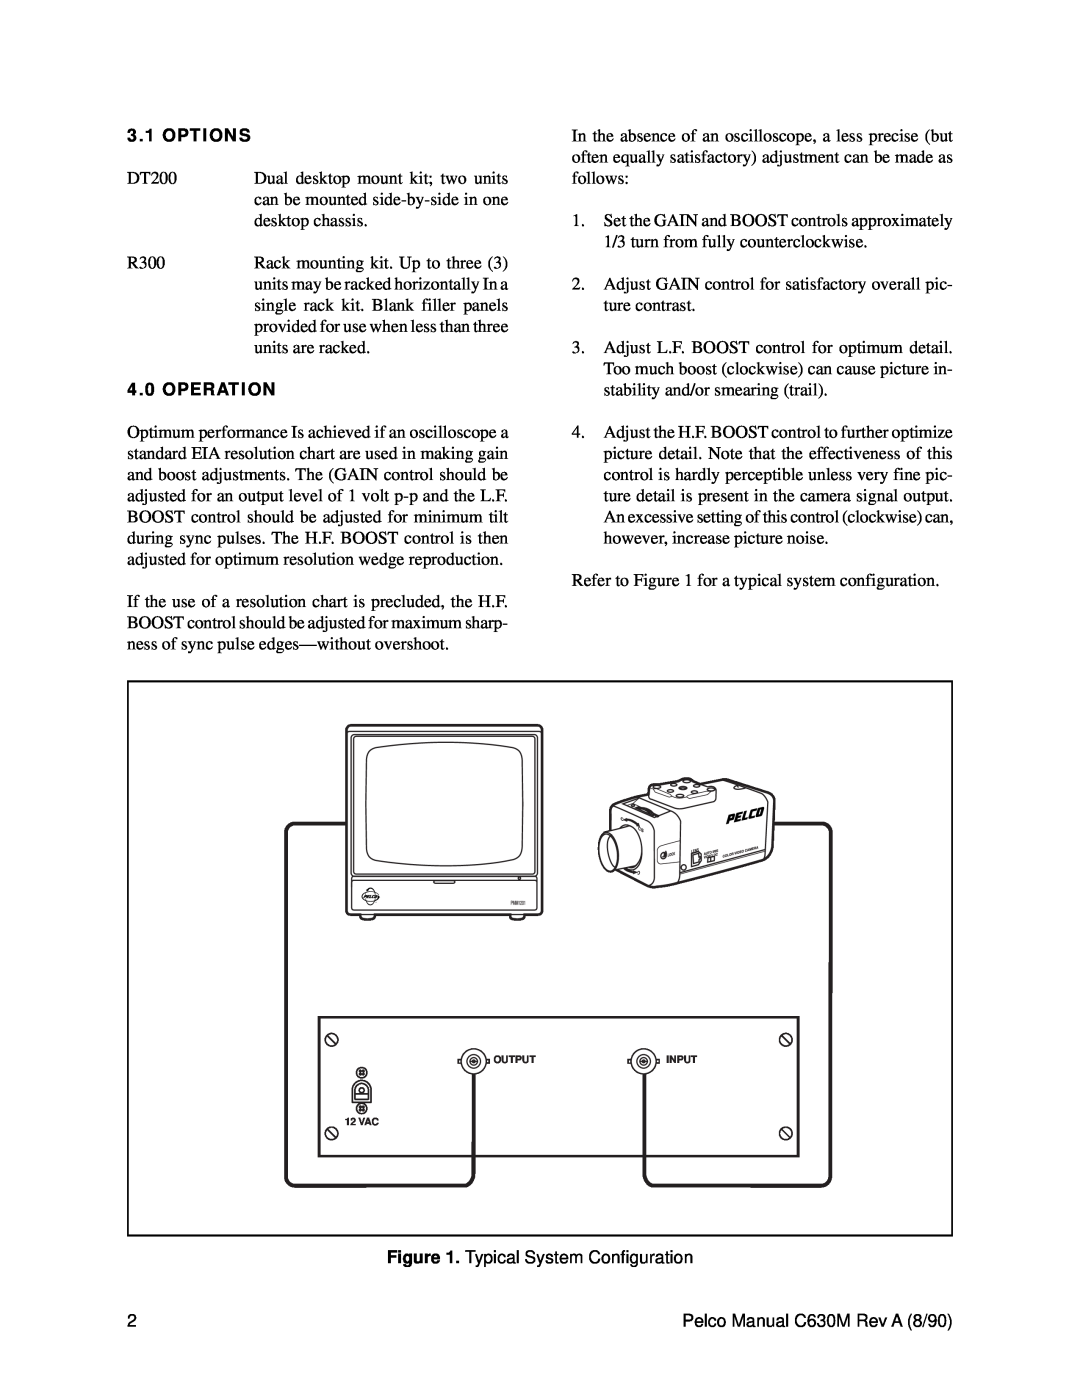 Pelco EA2010 operation manual Options, Operation 